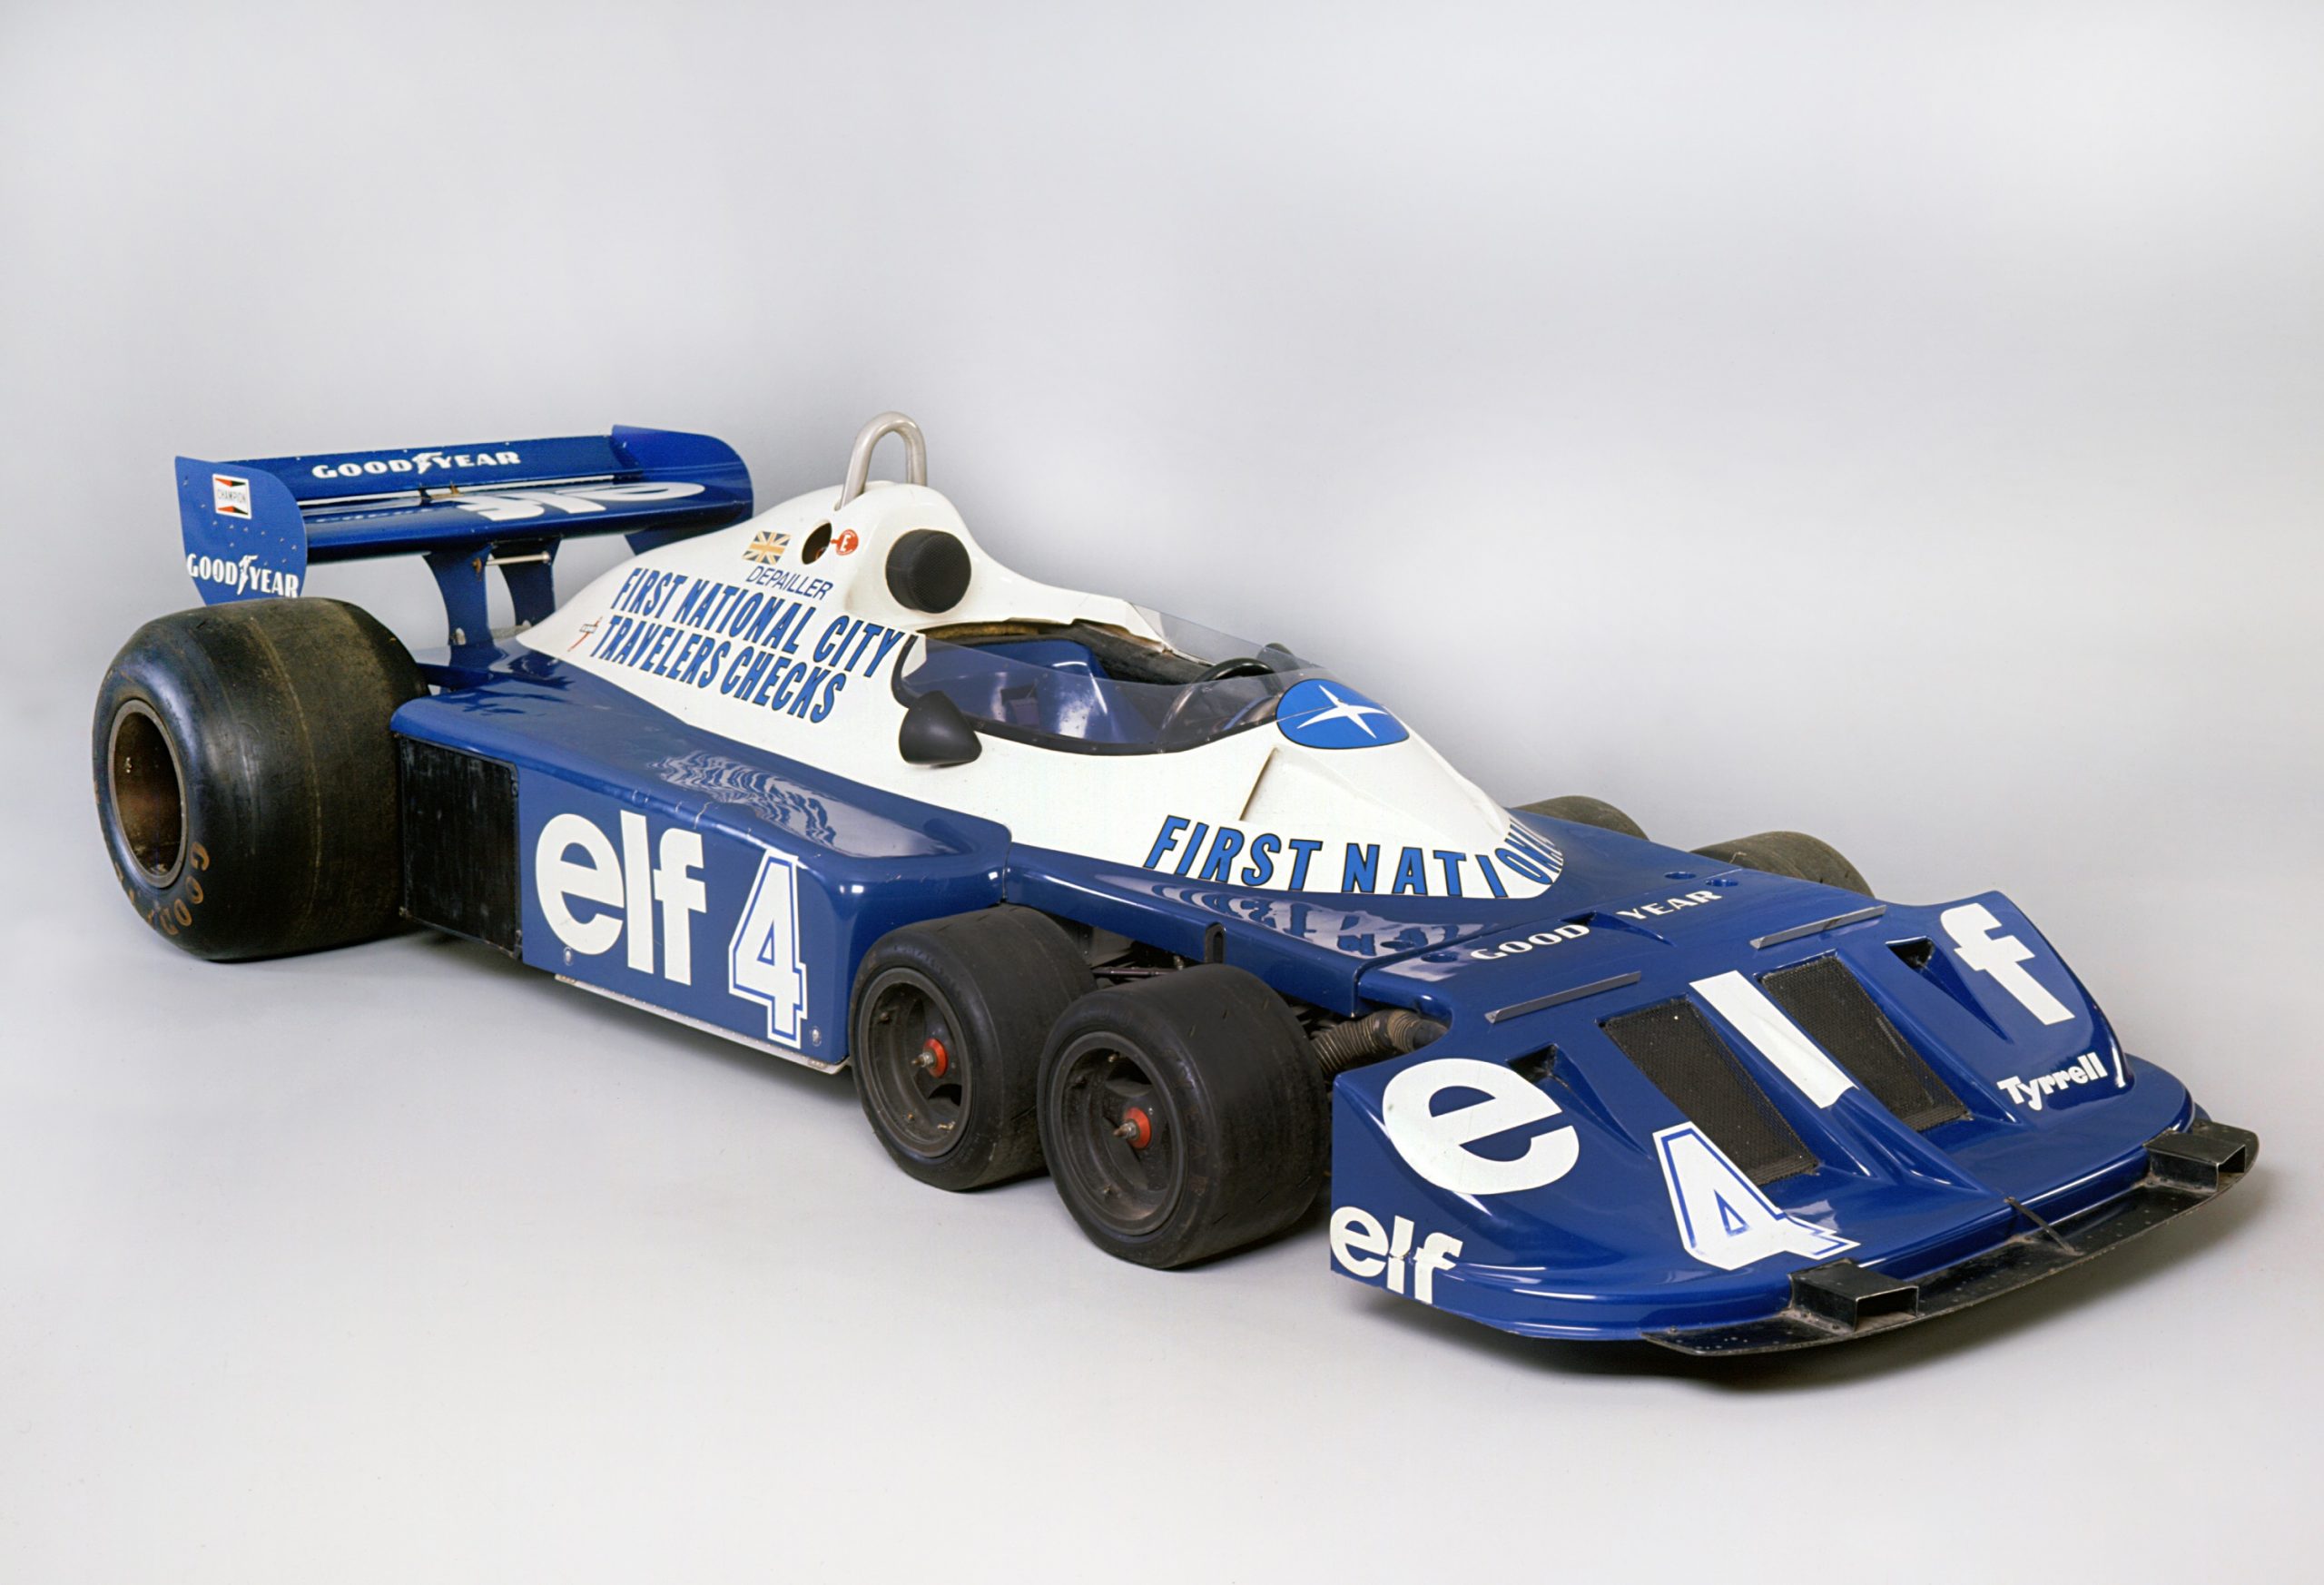 The Tyrrell P34 Formula 1 car in a photobooth